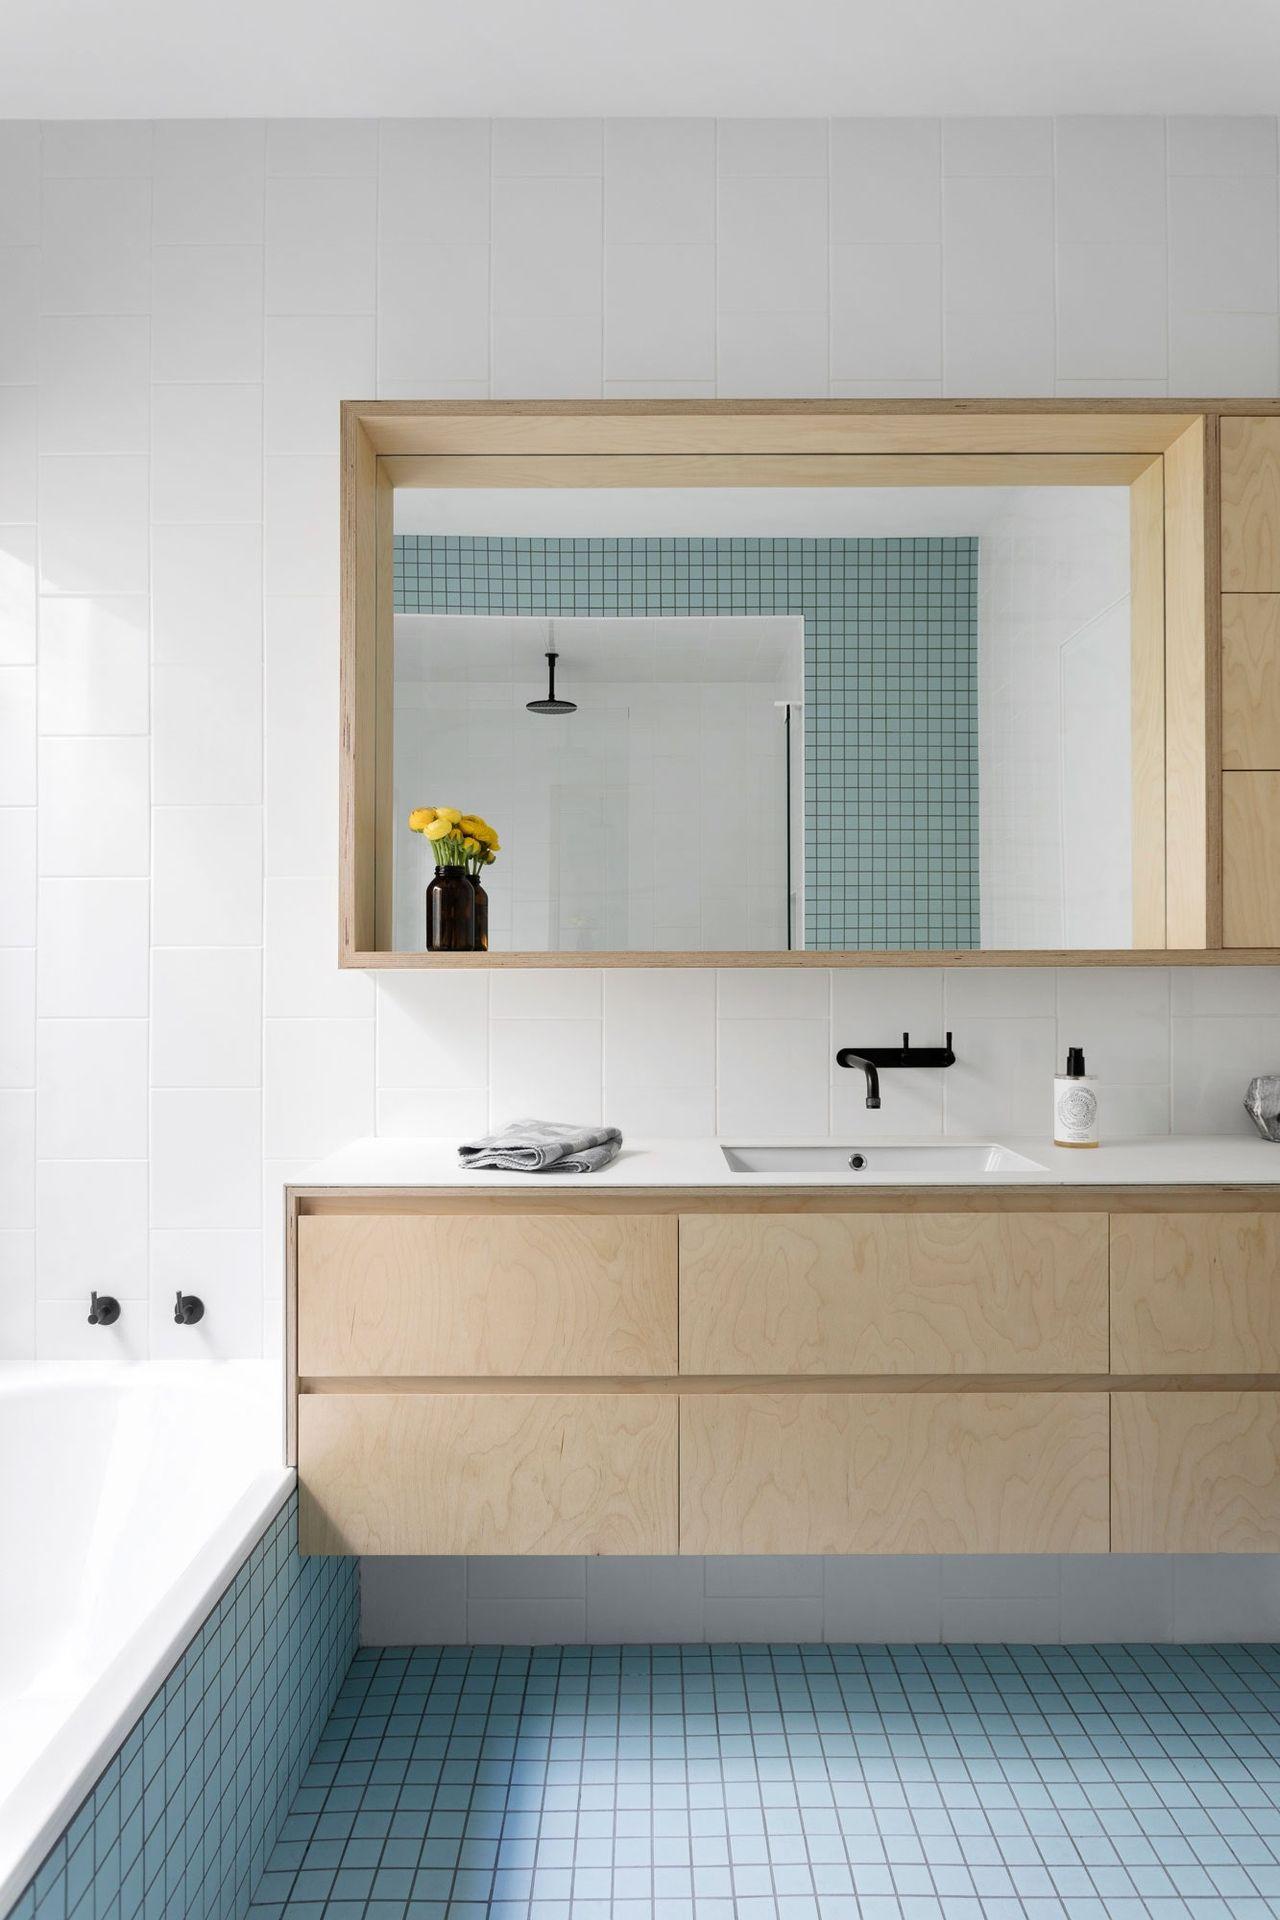 Solid teak and ceramic bathroom cabinet 120 cm - Bathroom